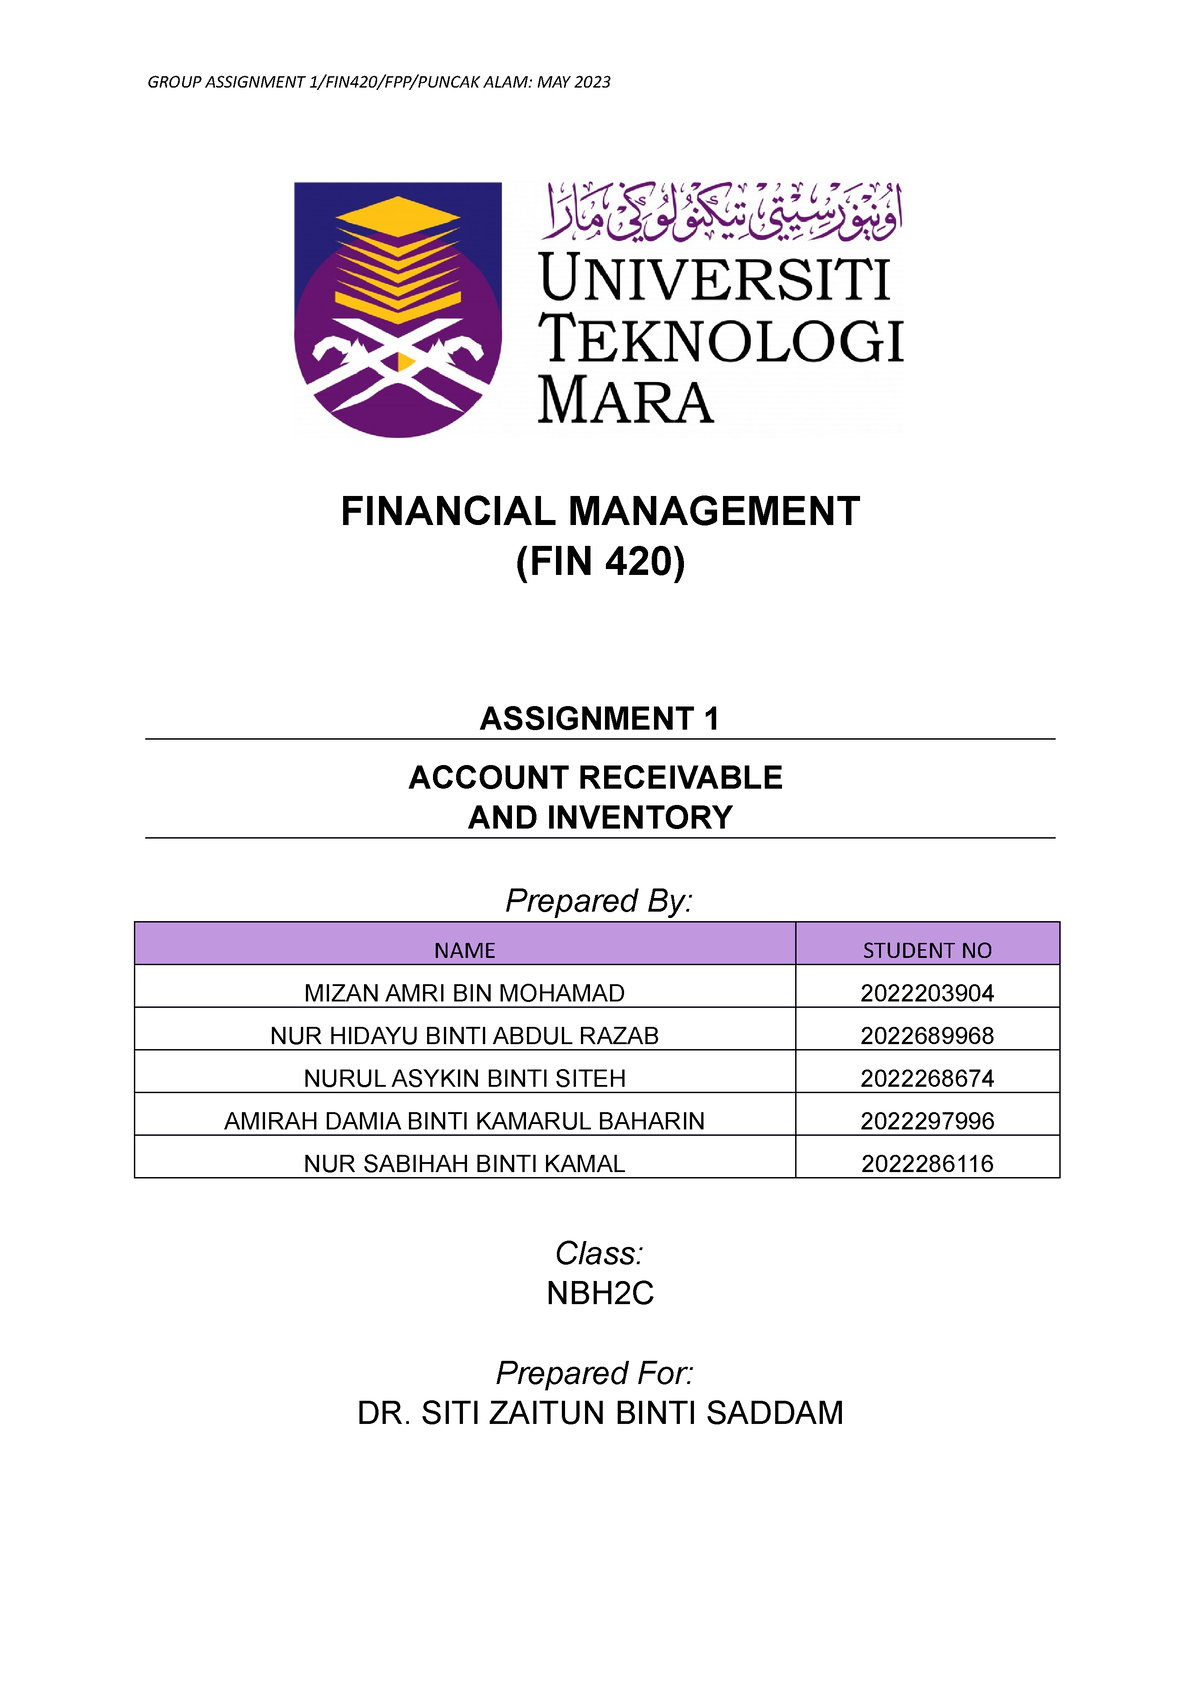 fin420 group assignment financial ratio